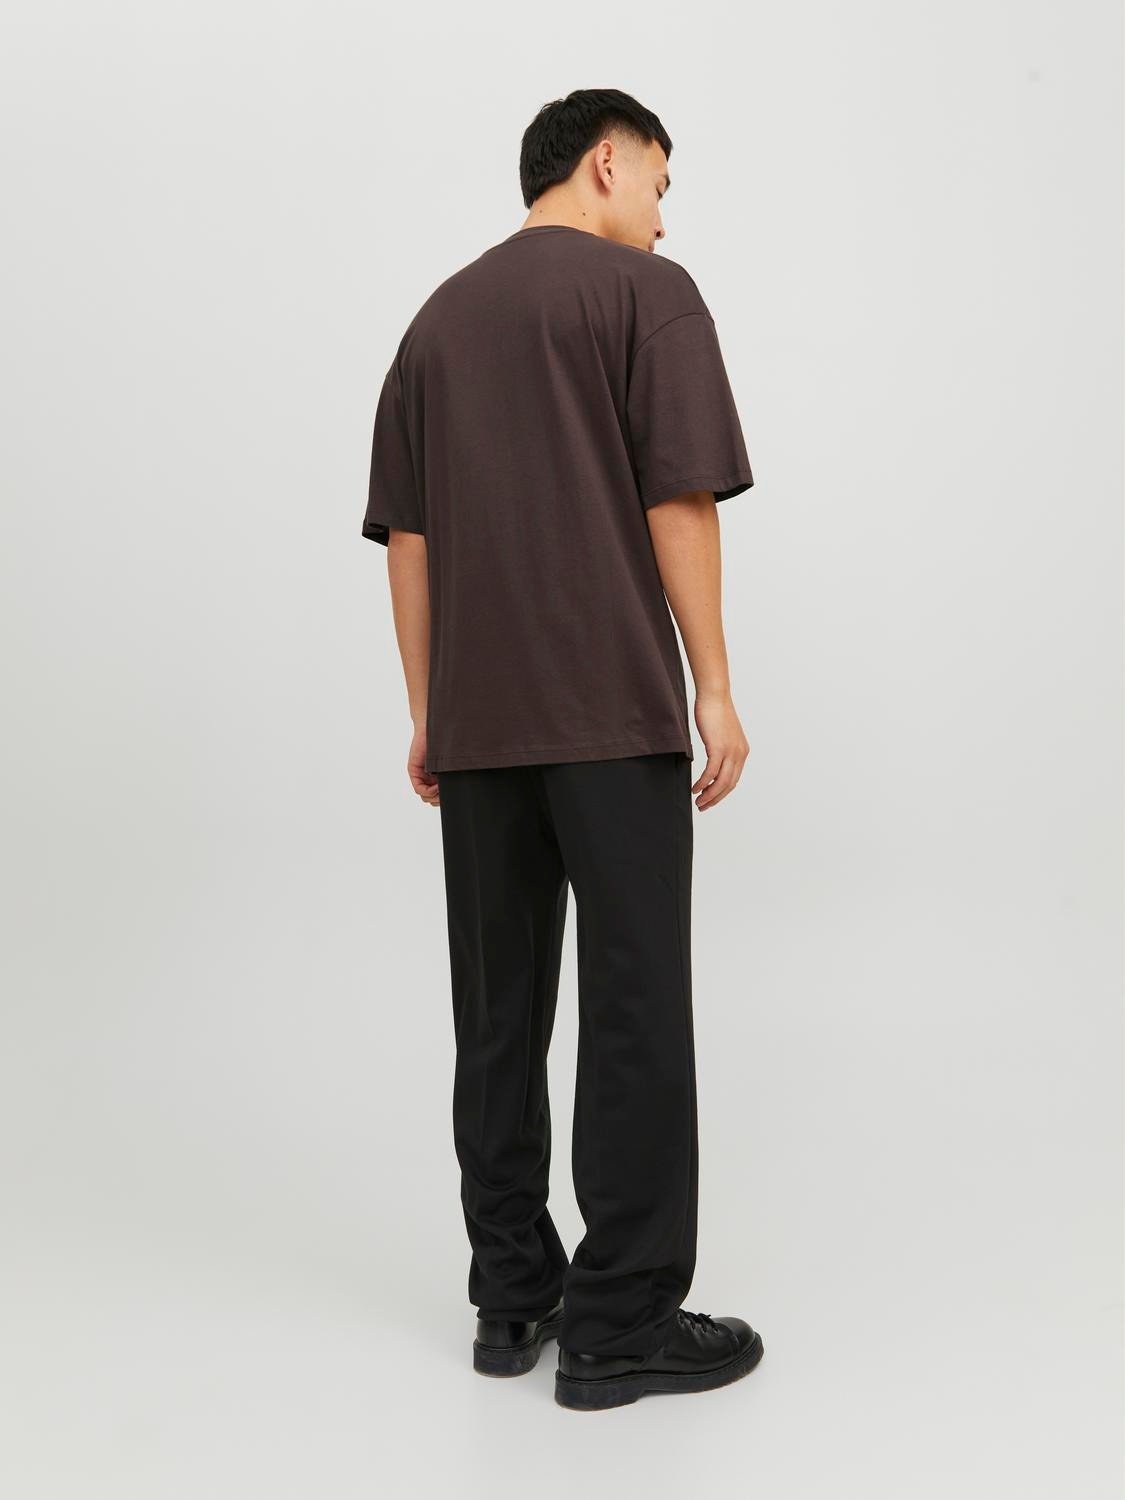 Jack & Jones Camiseta Liso Cuello redondo -Seal Brown - 12234745